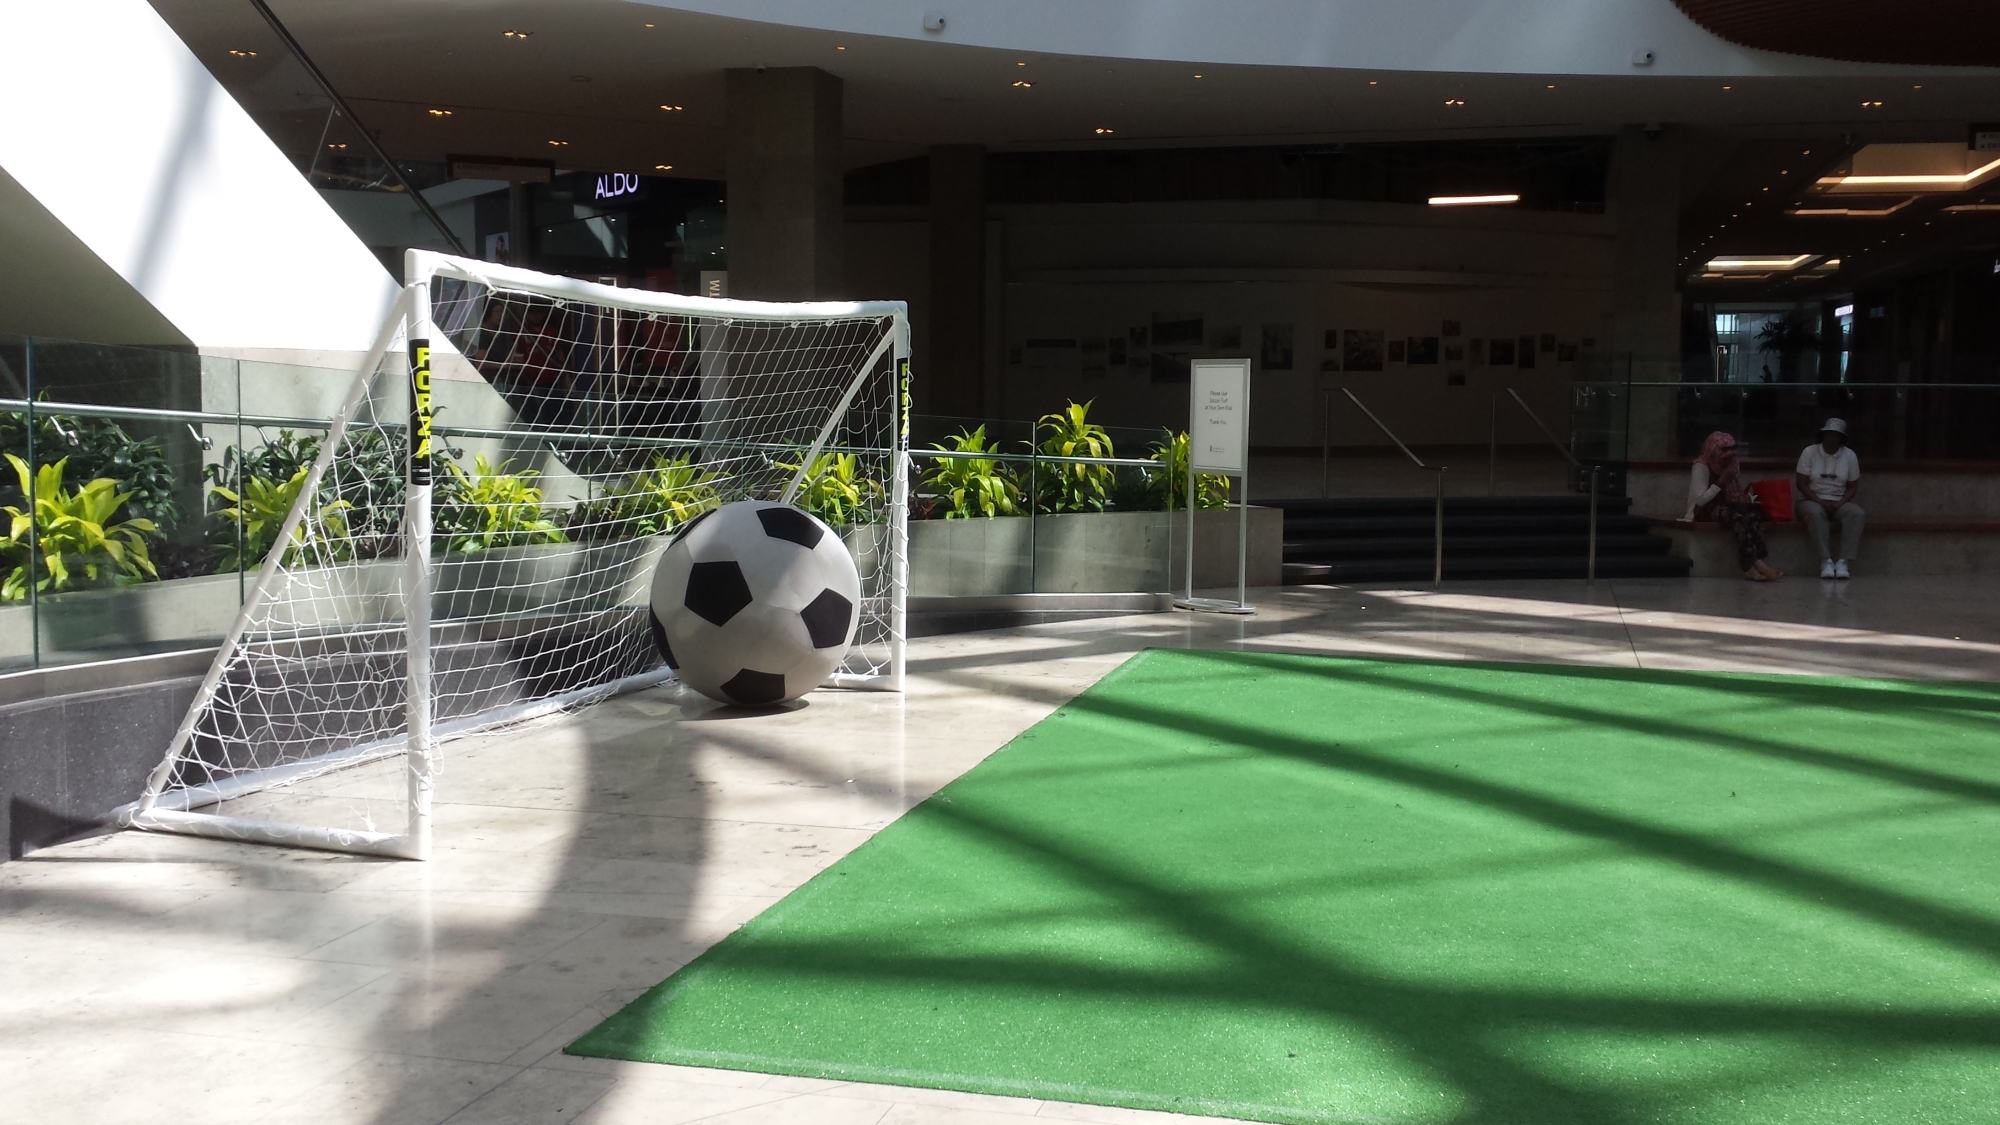 Huge soccer ball -football - on soccer field, footballl pitch